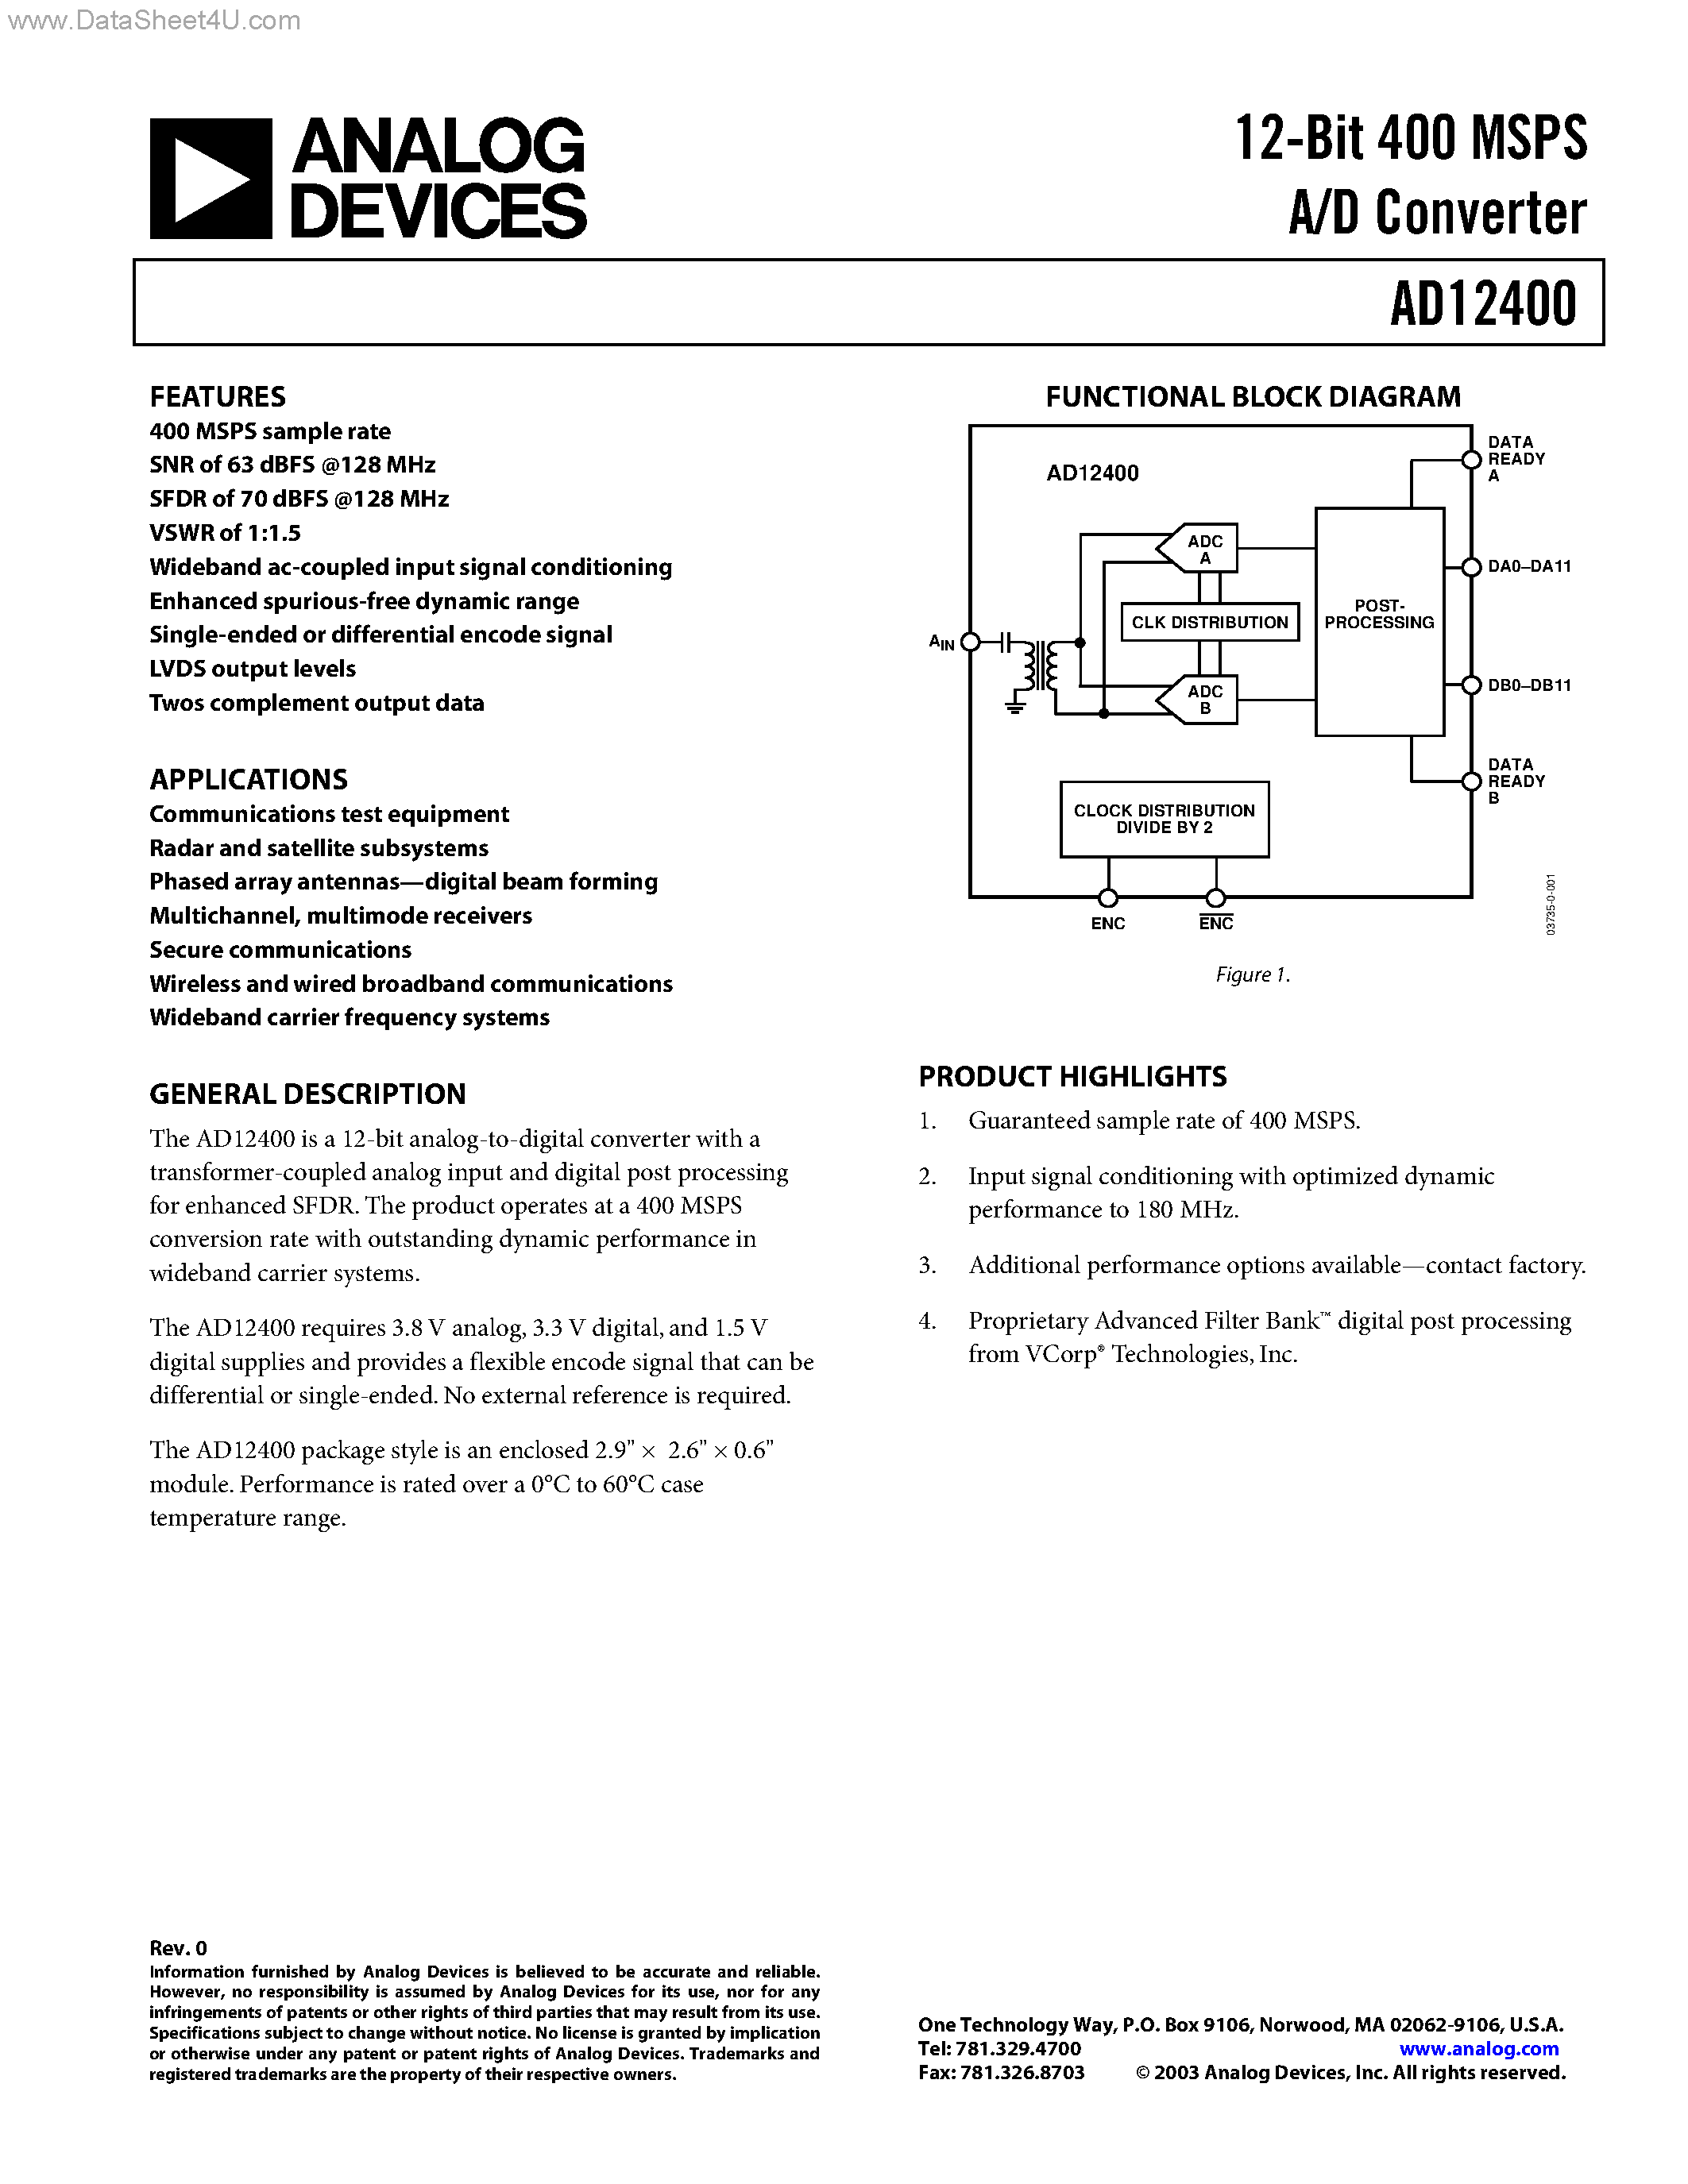 Даташит AD12400 - 12-Bit 400 MSPS A/D Converter страница 1